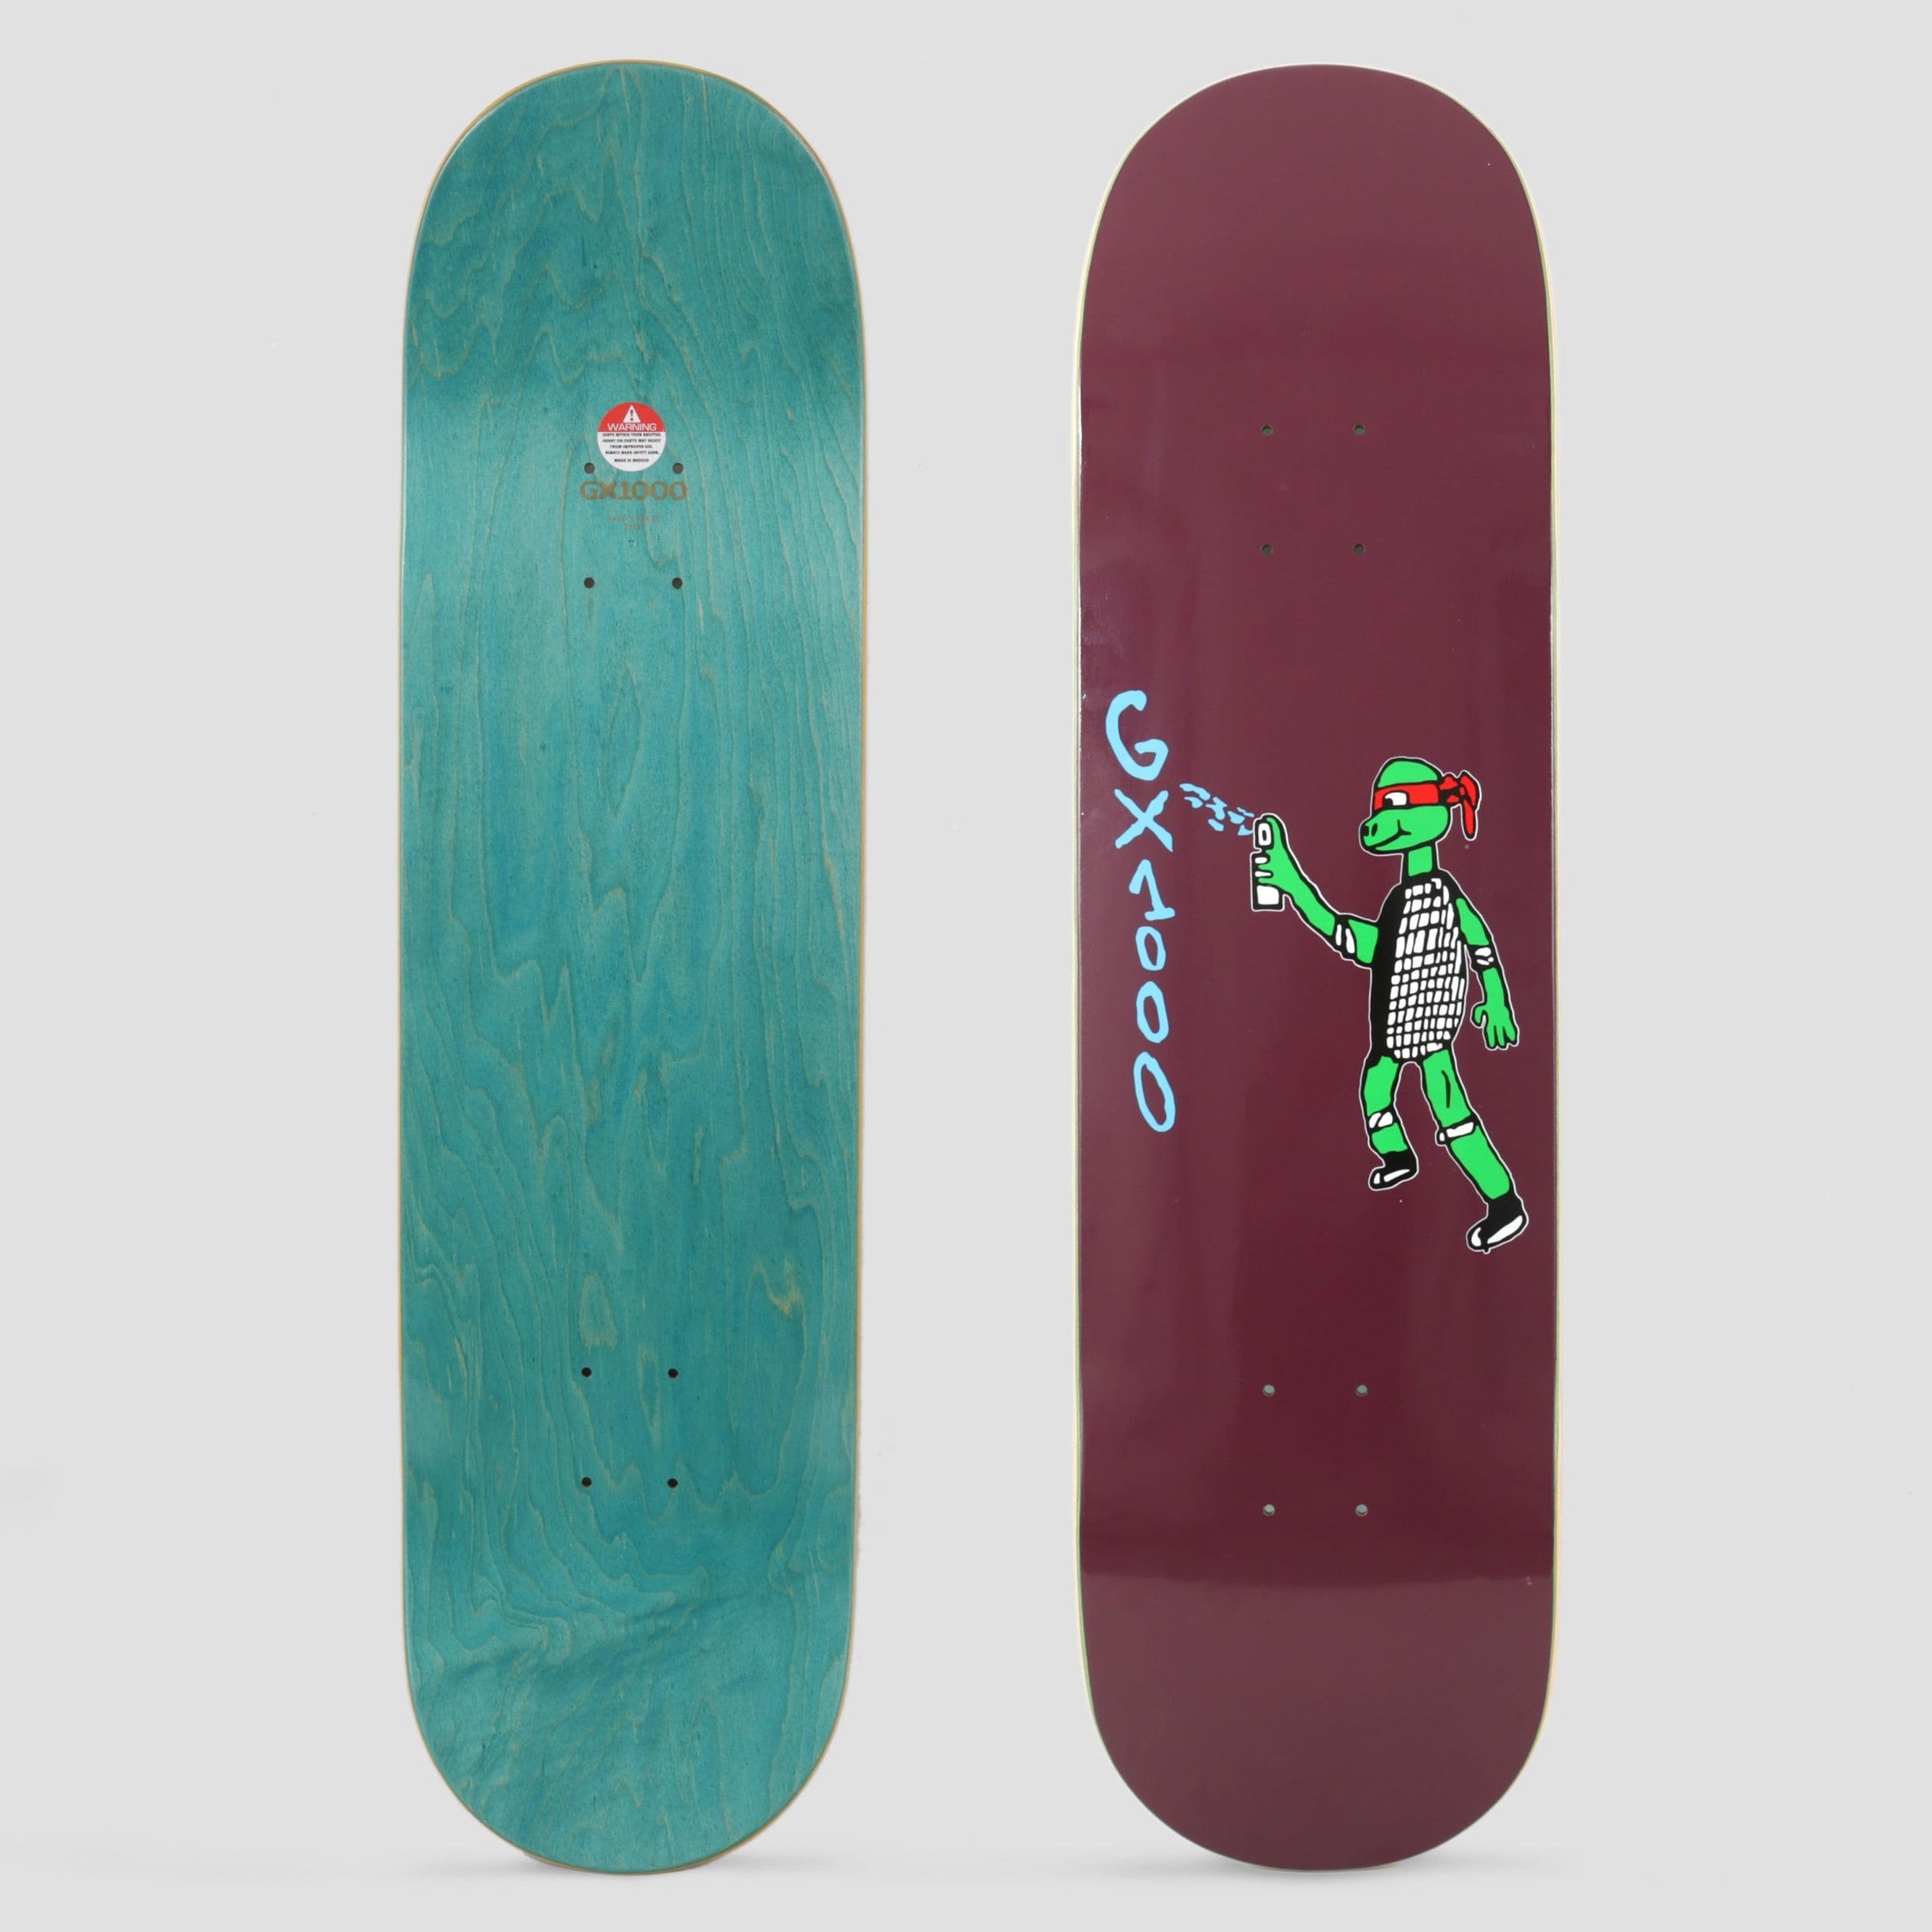 GX1000 8.125 Spray Paint Skateboard Deck Purple